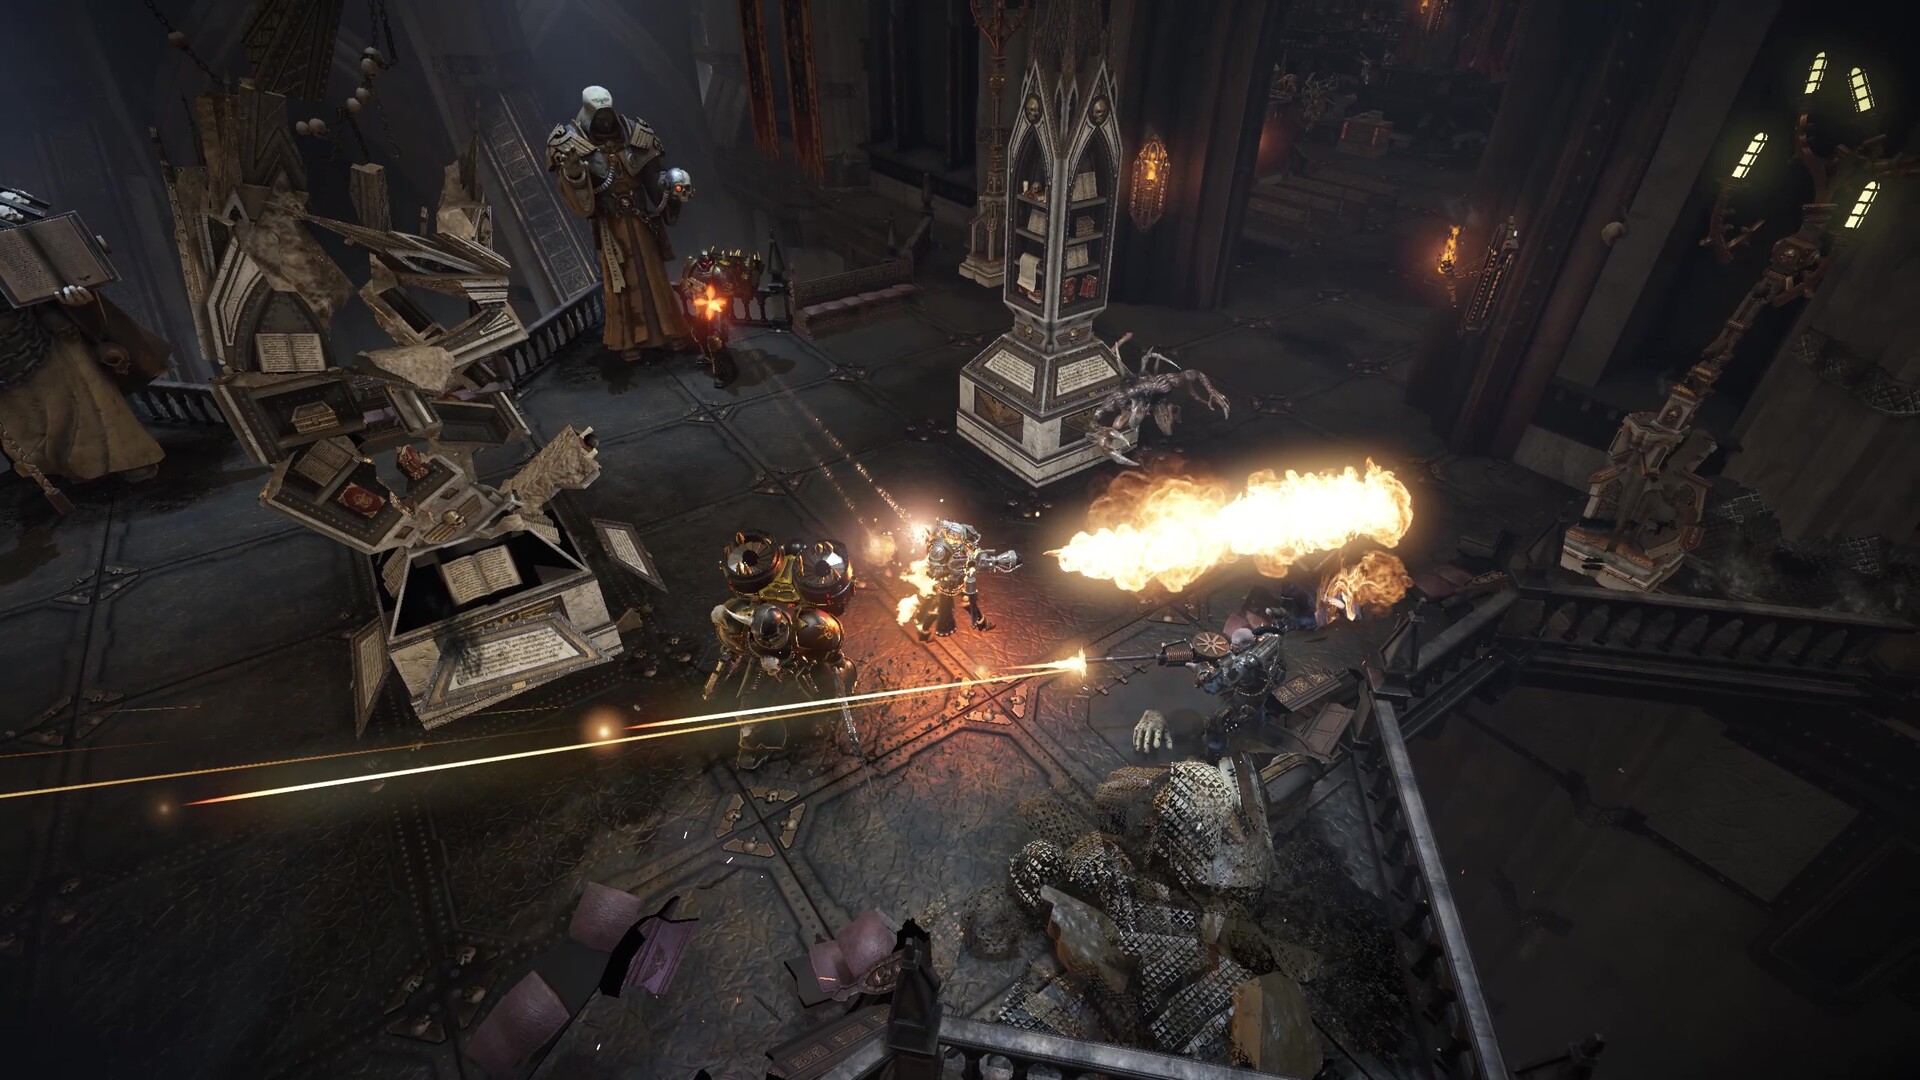 Warhammer 40,000: Inquisitor - Martyr - Sororitas Class DLC Steam CD Key